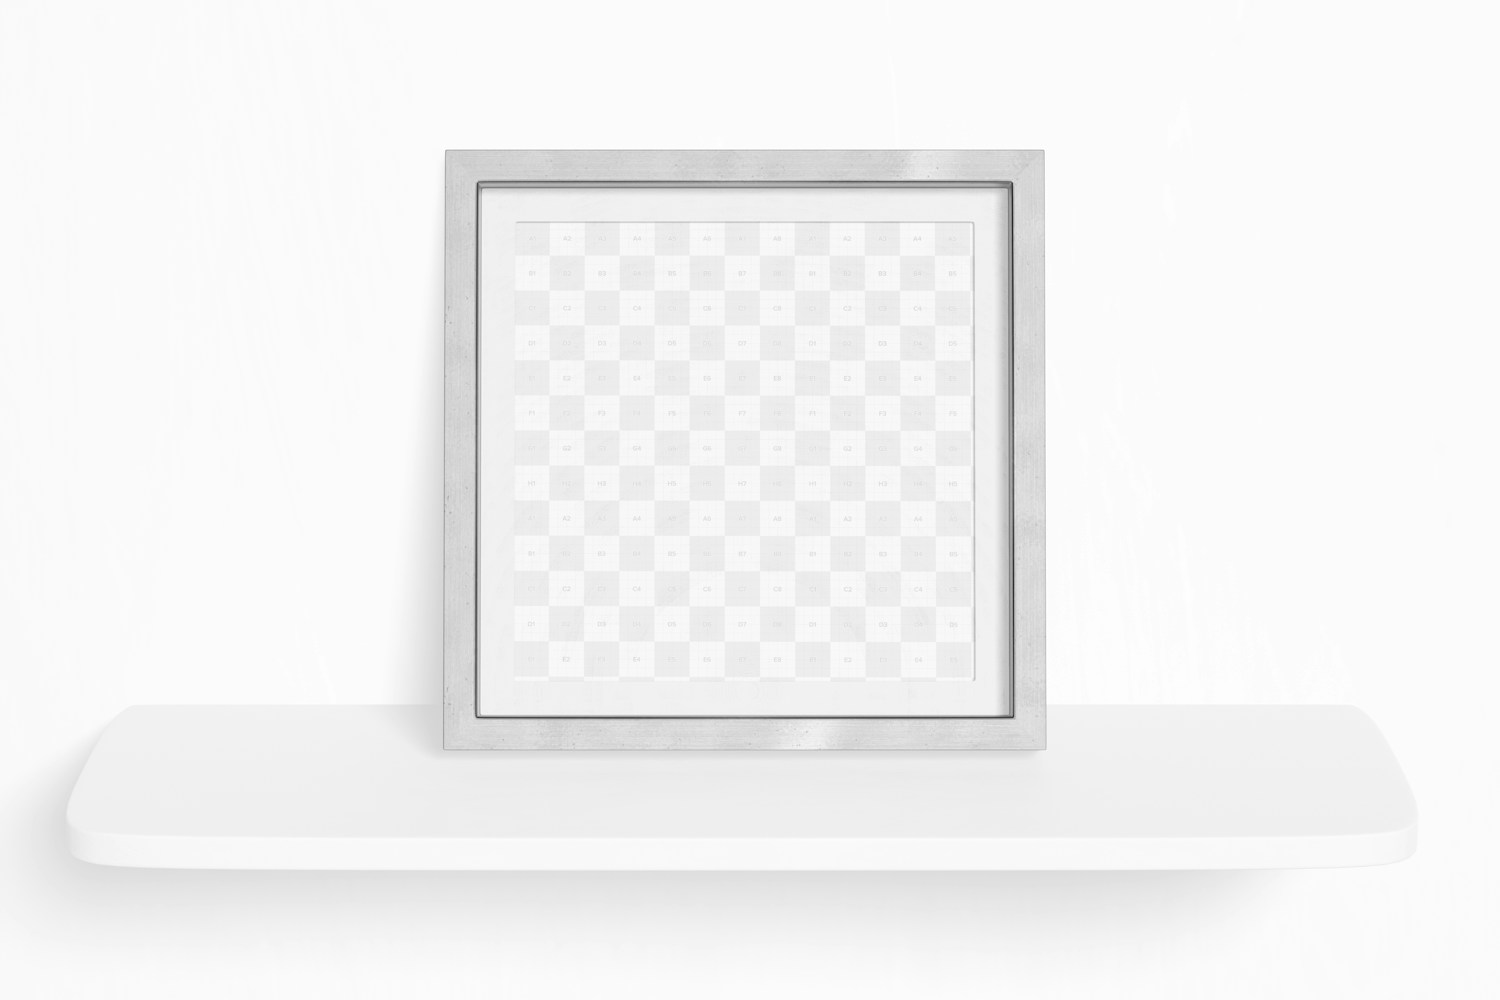 Square Metallic Shadow Box Frame on a Shelf Mockup